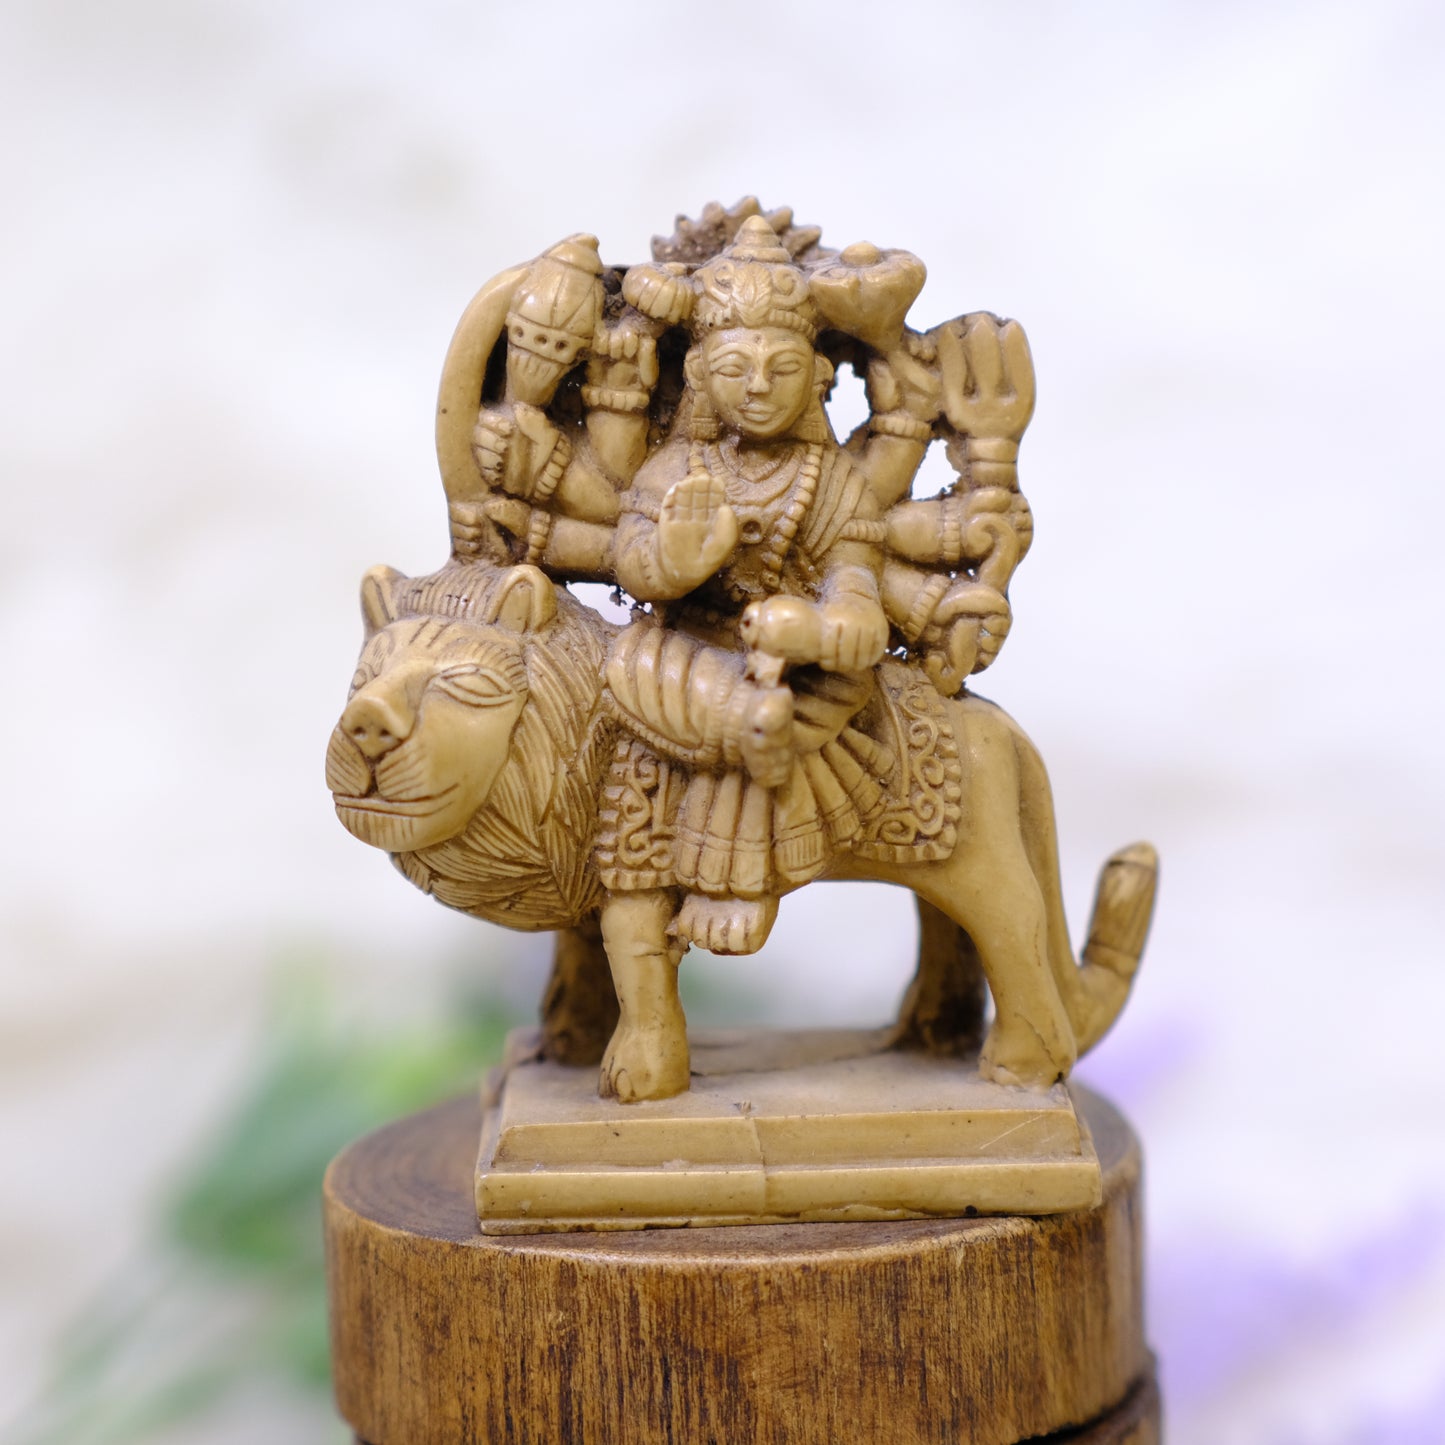 Handmade Durga statue ; the Goddess of Protection